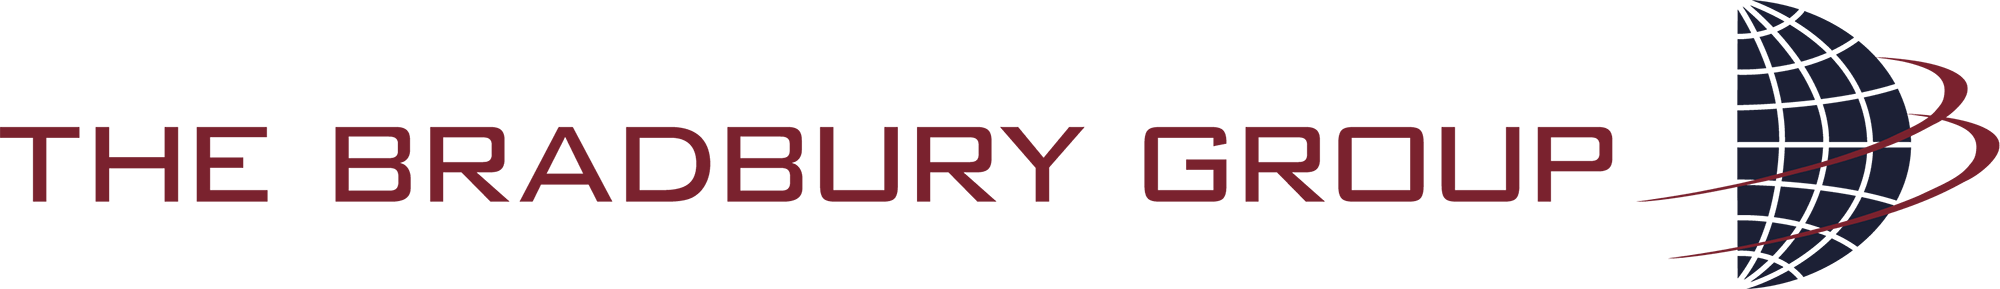 Bradury Group logo Navy Maroon Horizontal